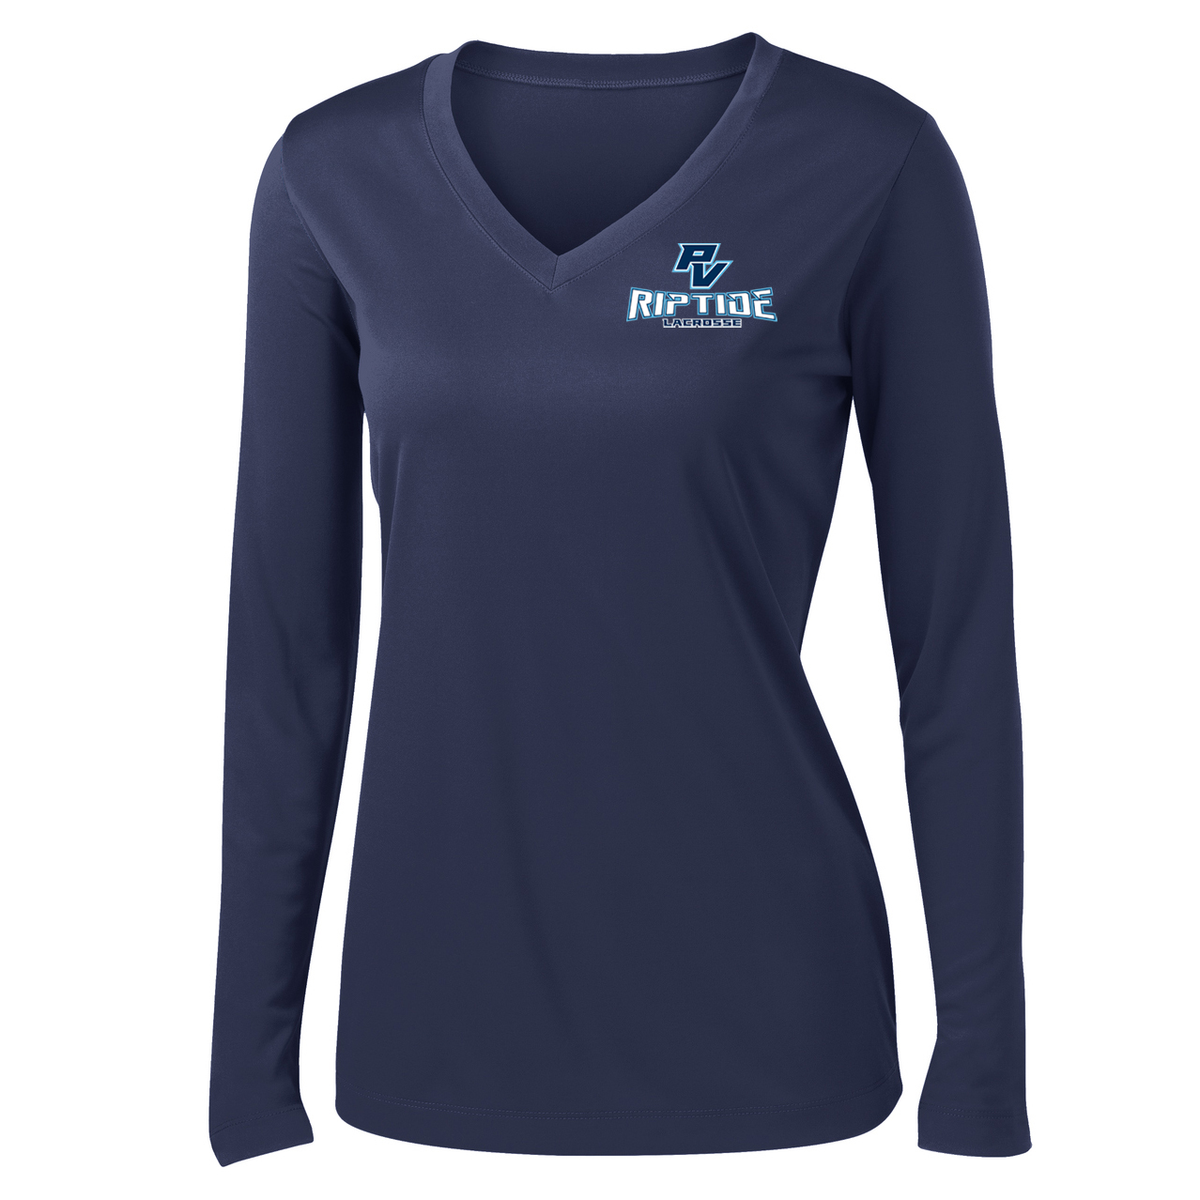 Ponte Vedra Riptide Lacrosse Women's Long Sleeve Performance Shirt